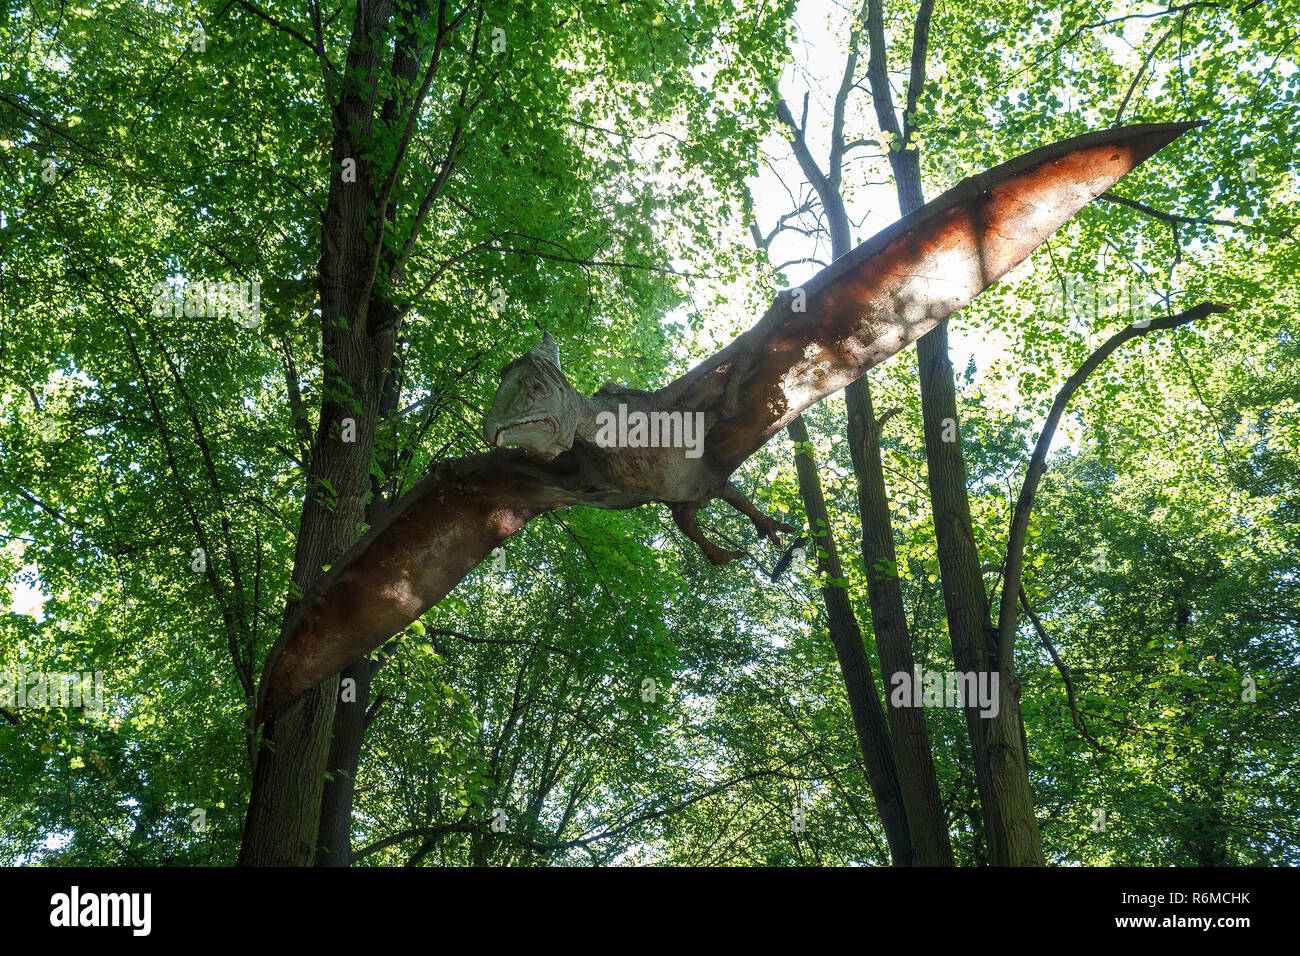 Flying preistorici Pteranodon dinosauri in natura Foto Stock